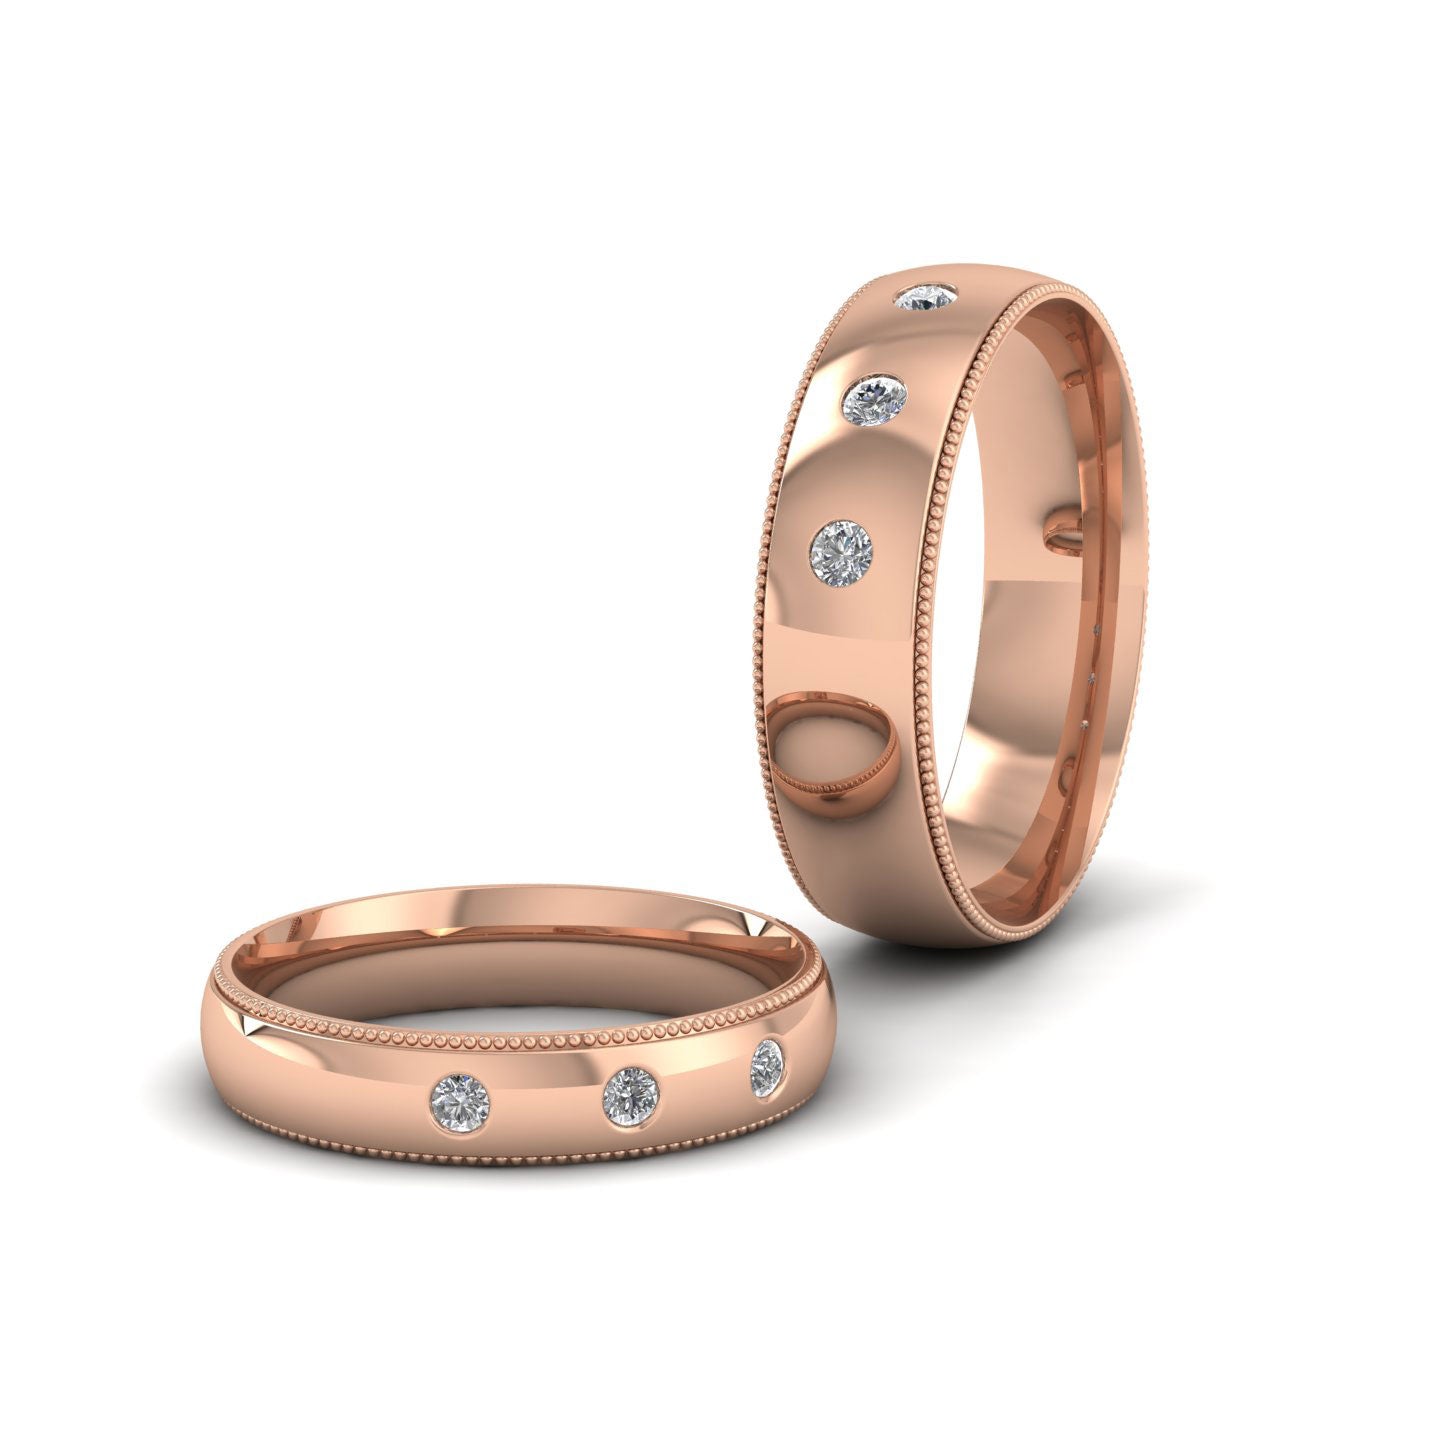 Diamond Set And Millgrain Edge 9ct Rose Gold 4mm Wedding Ring